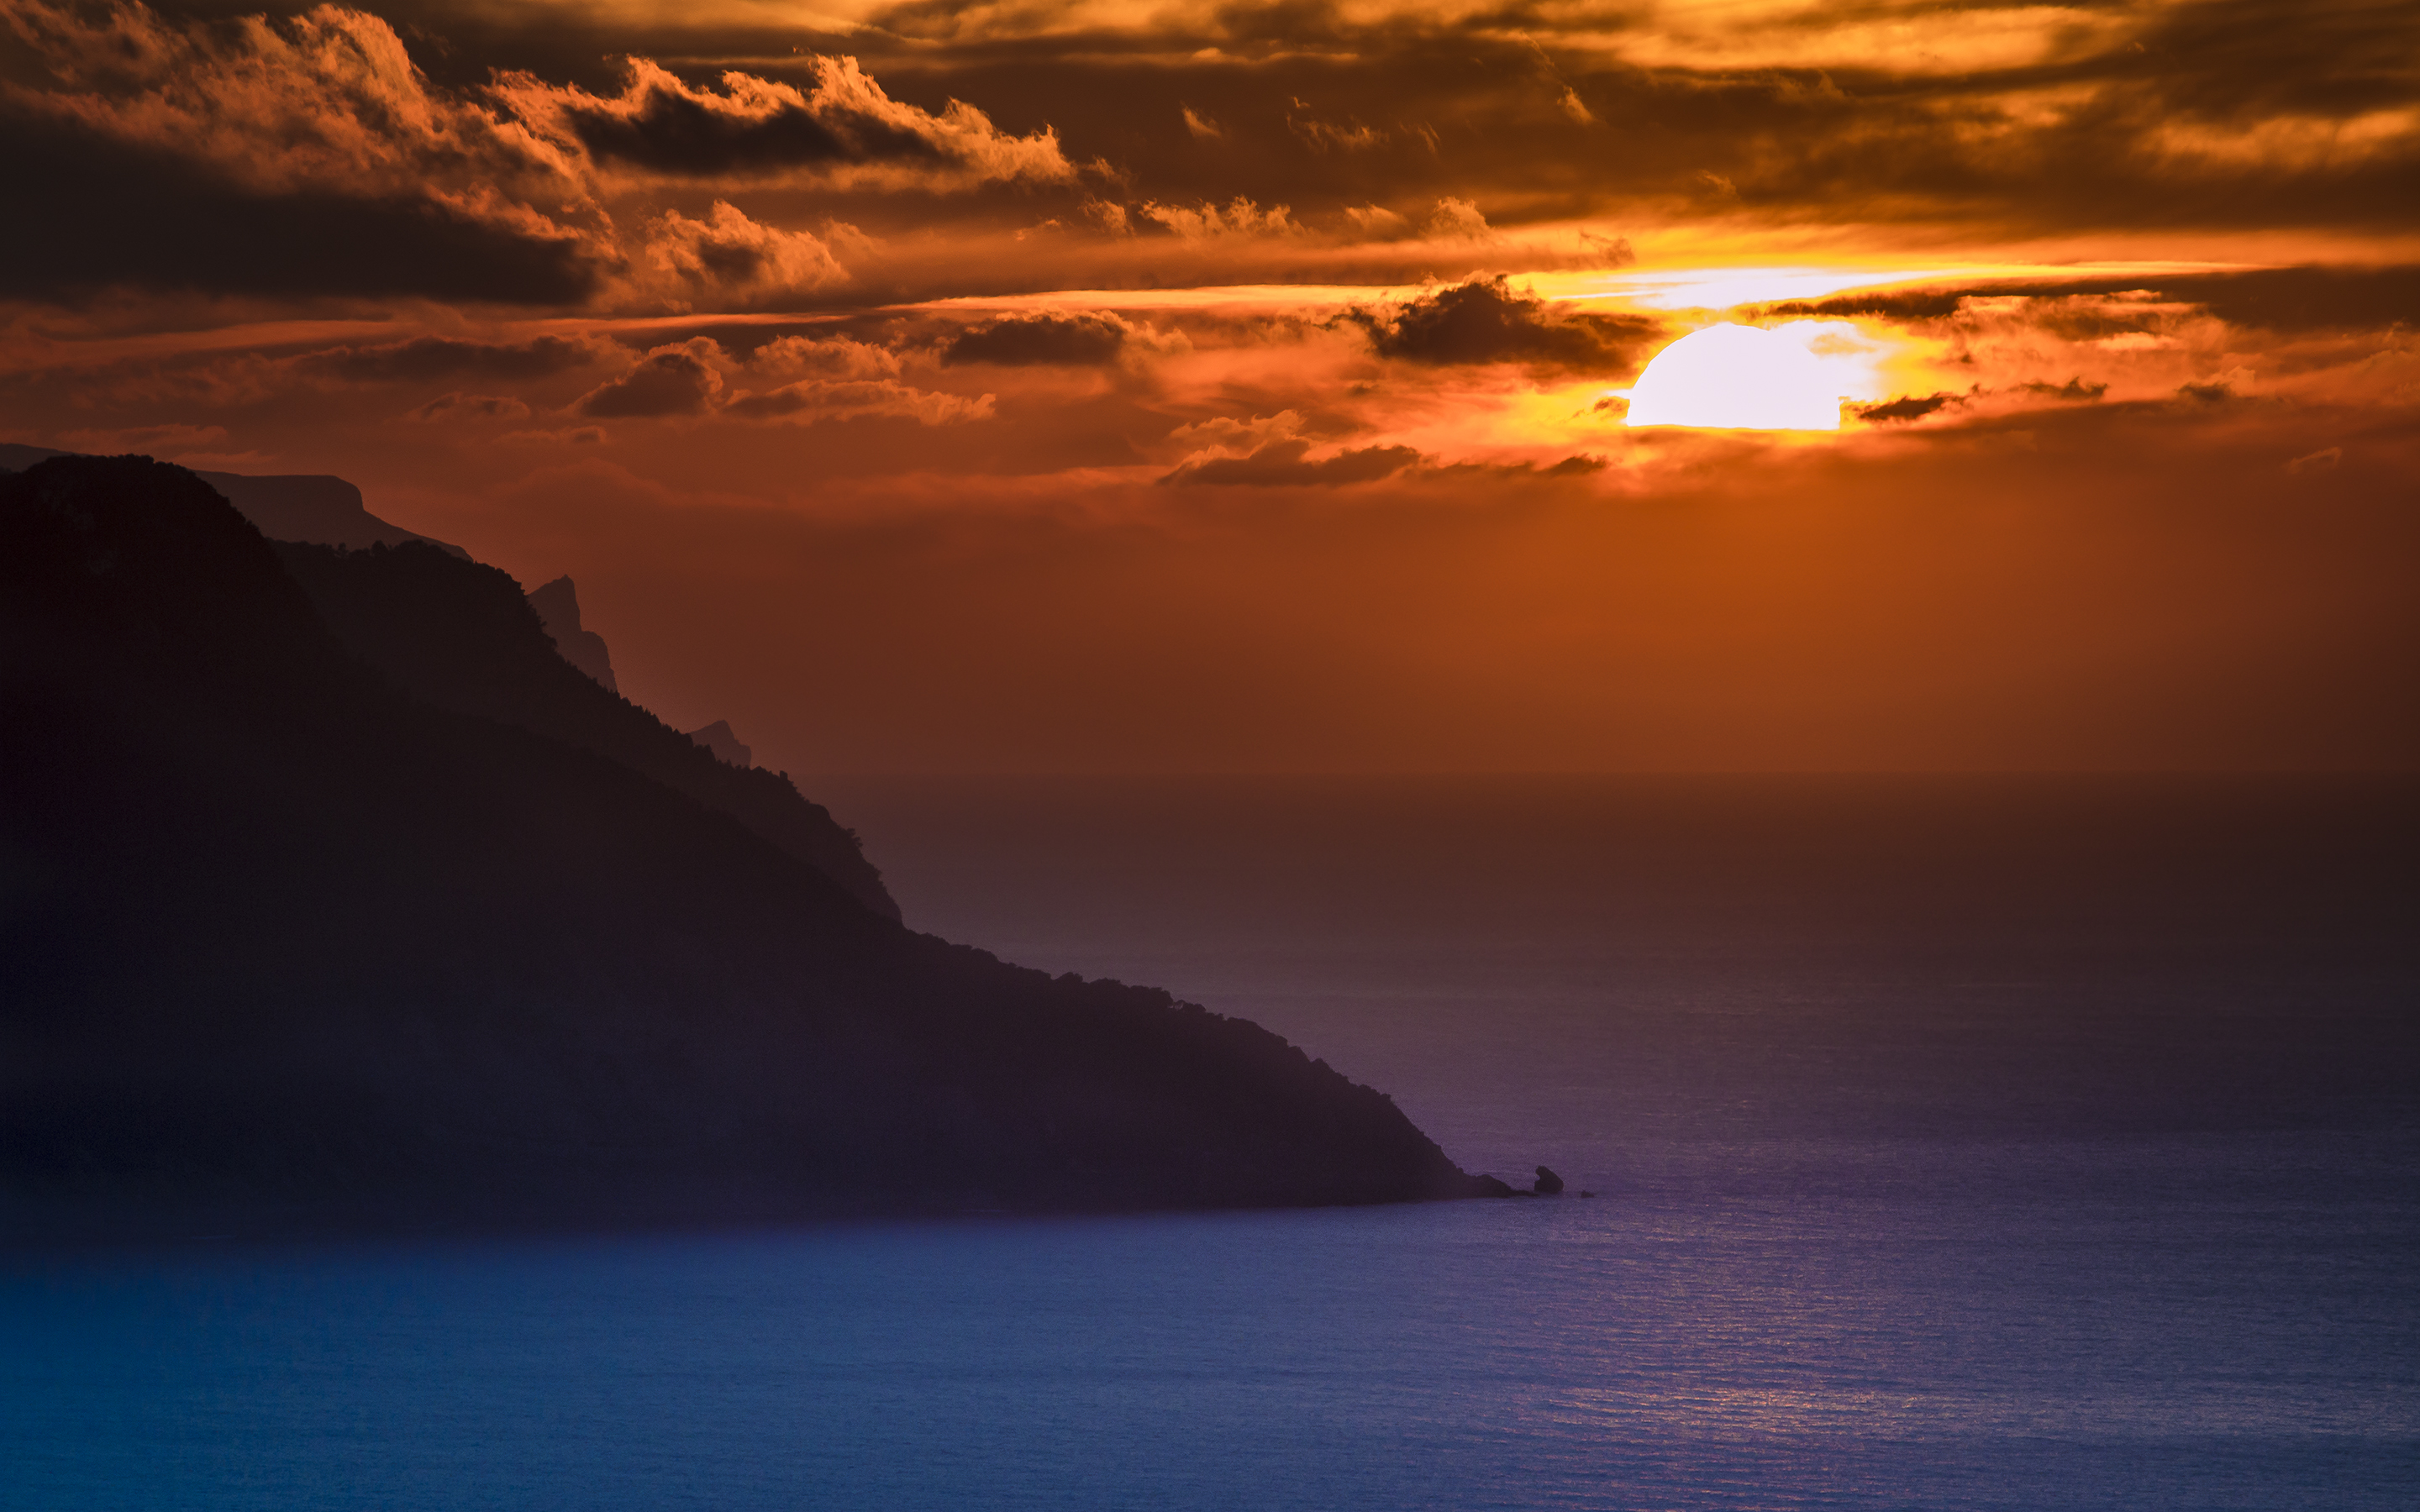 Ocean Sunset HD Wallpaper Background Image 2880x1800 ID